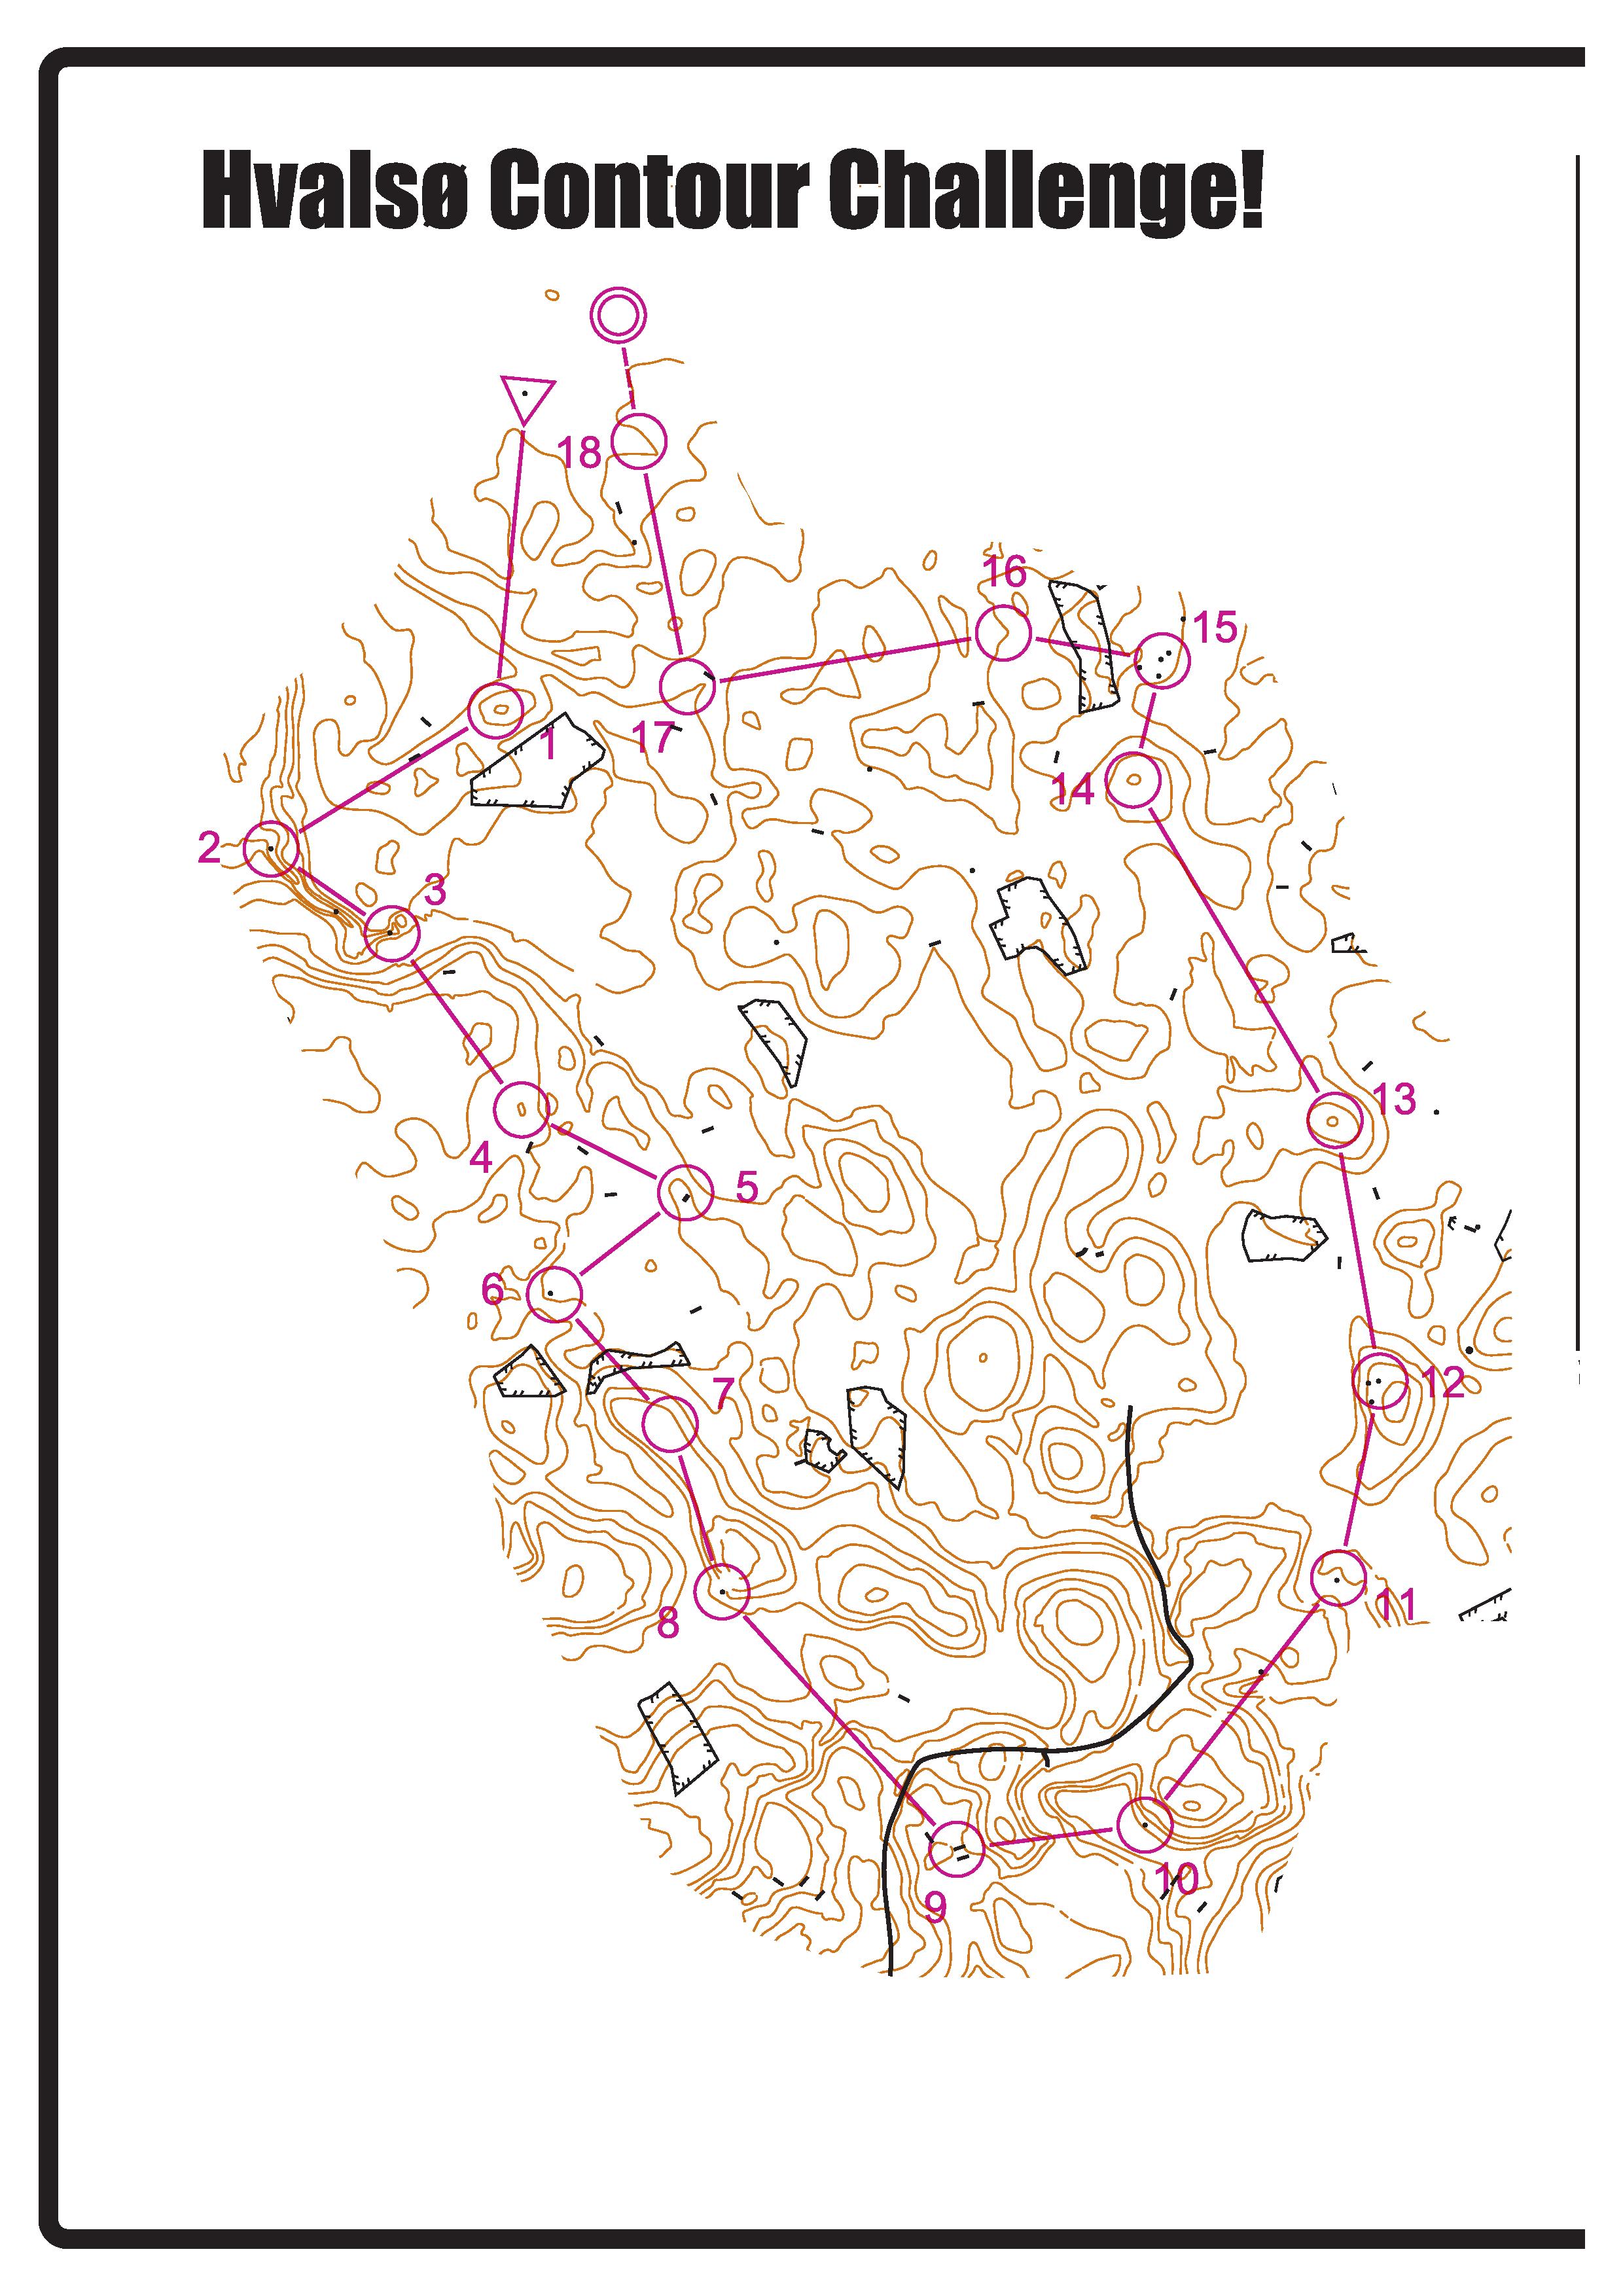 Hvalsø contour challenge (2017-02-18)